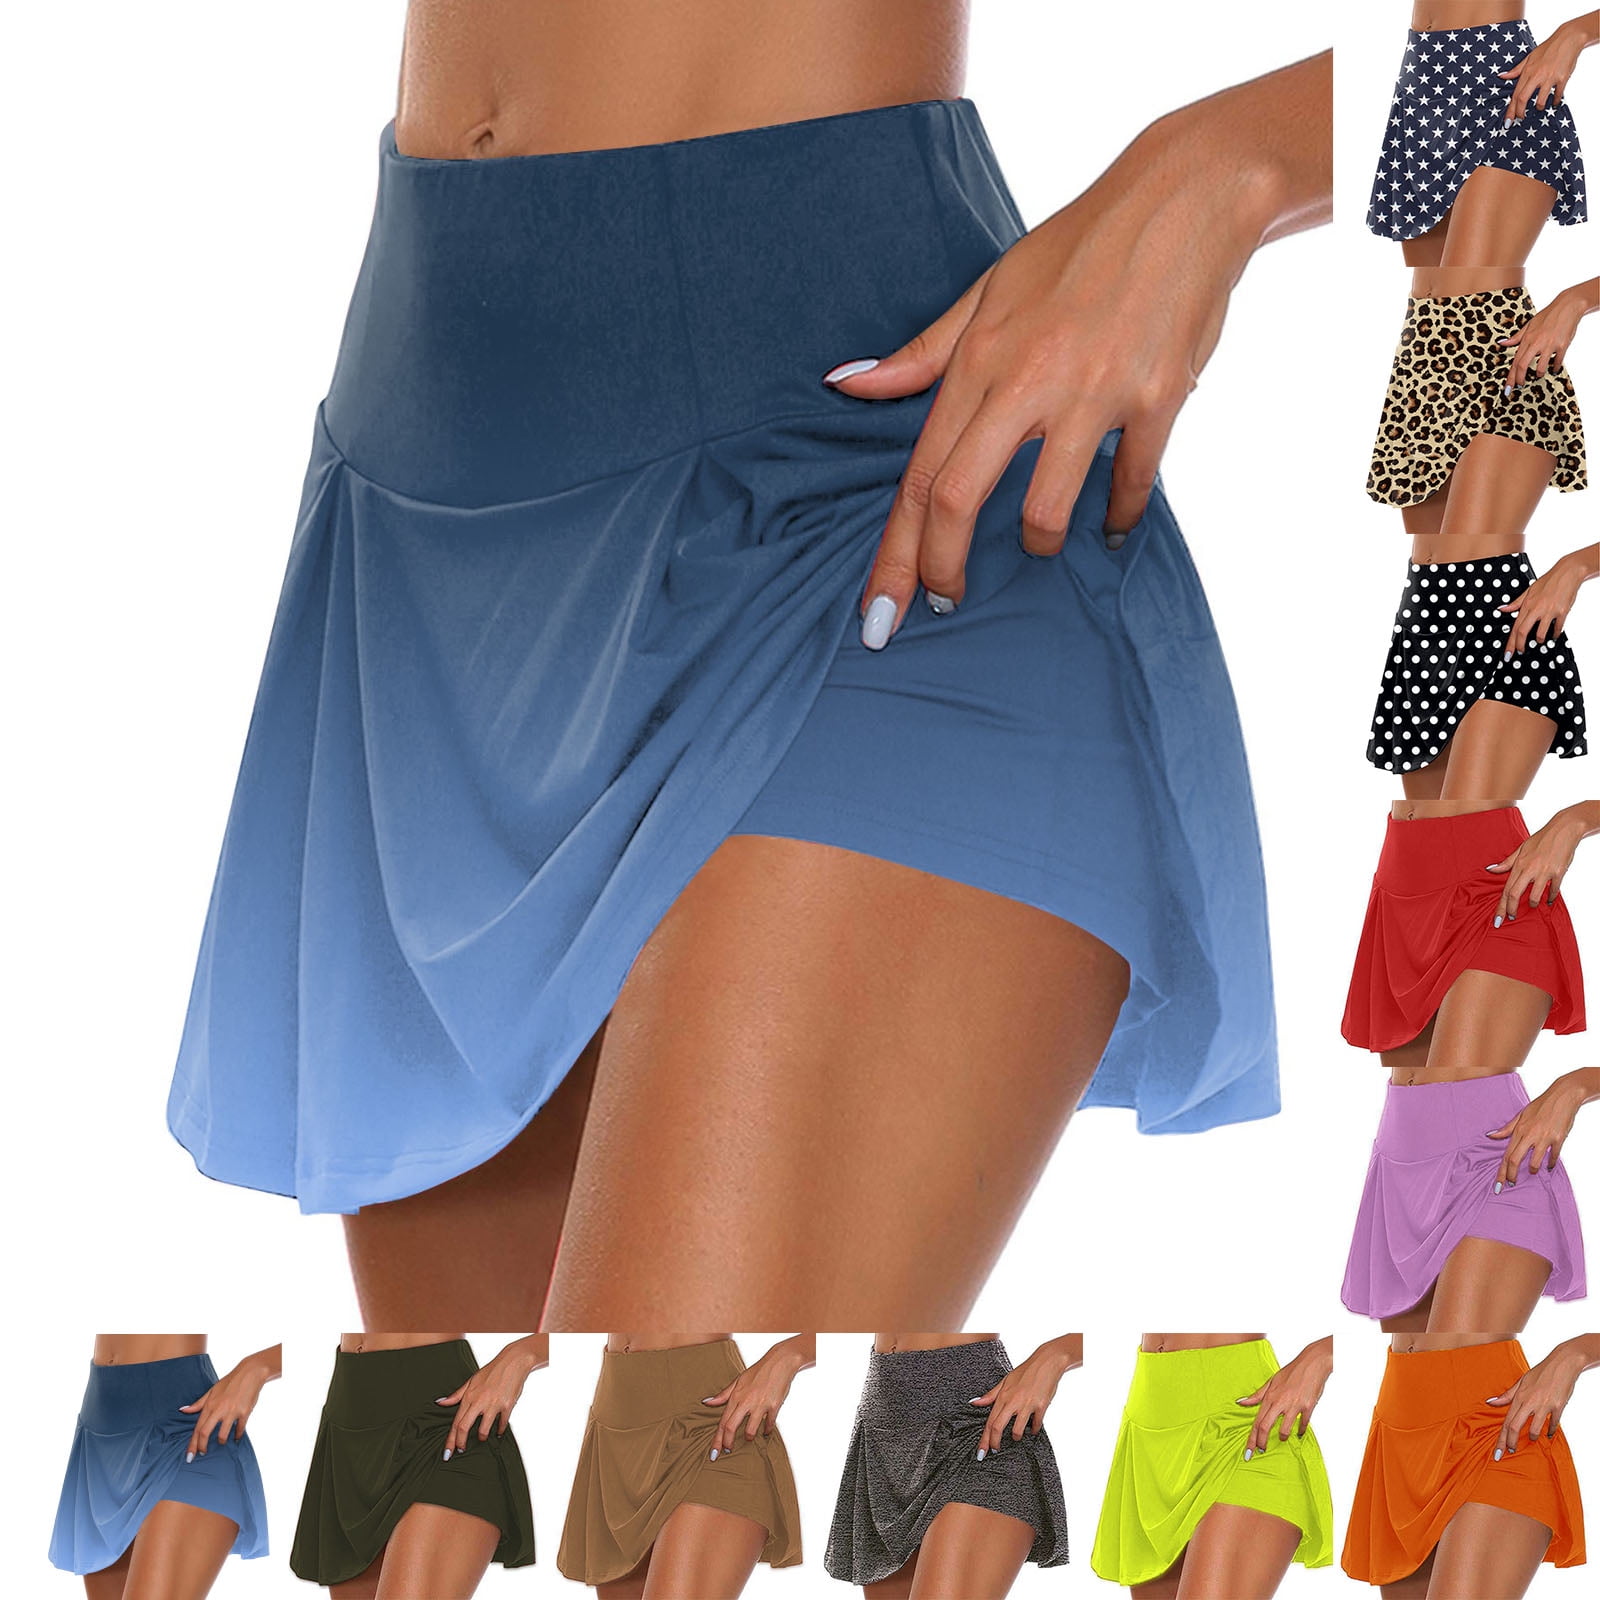 IZhansean Women s Tennis Dress Shorts Underneath Solid Color